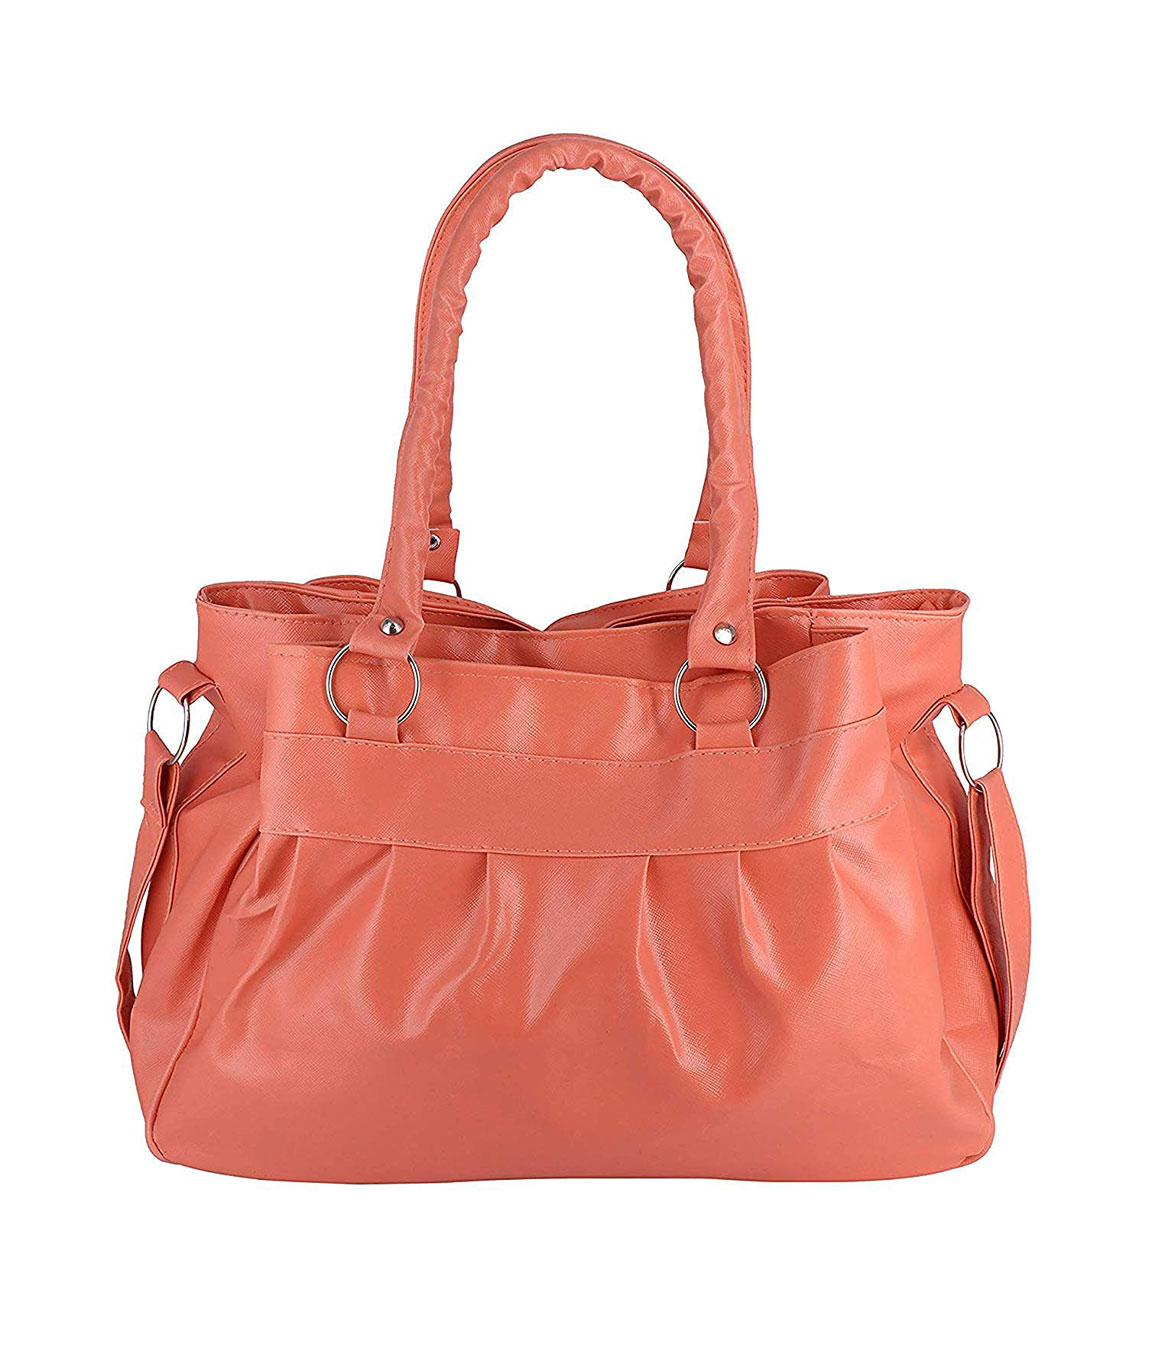 sk noor casual handbag shoulder bag with sling belt women girl s office bag c